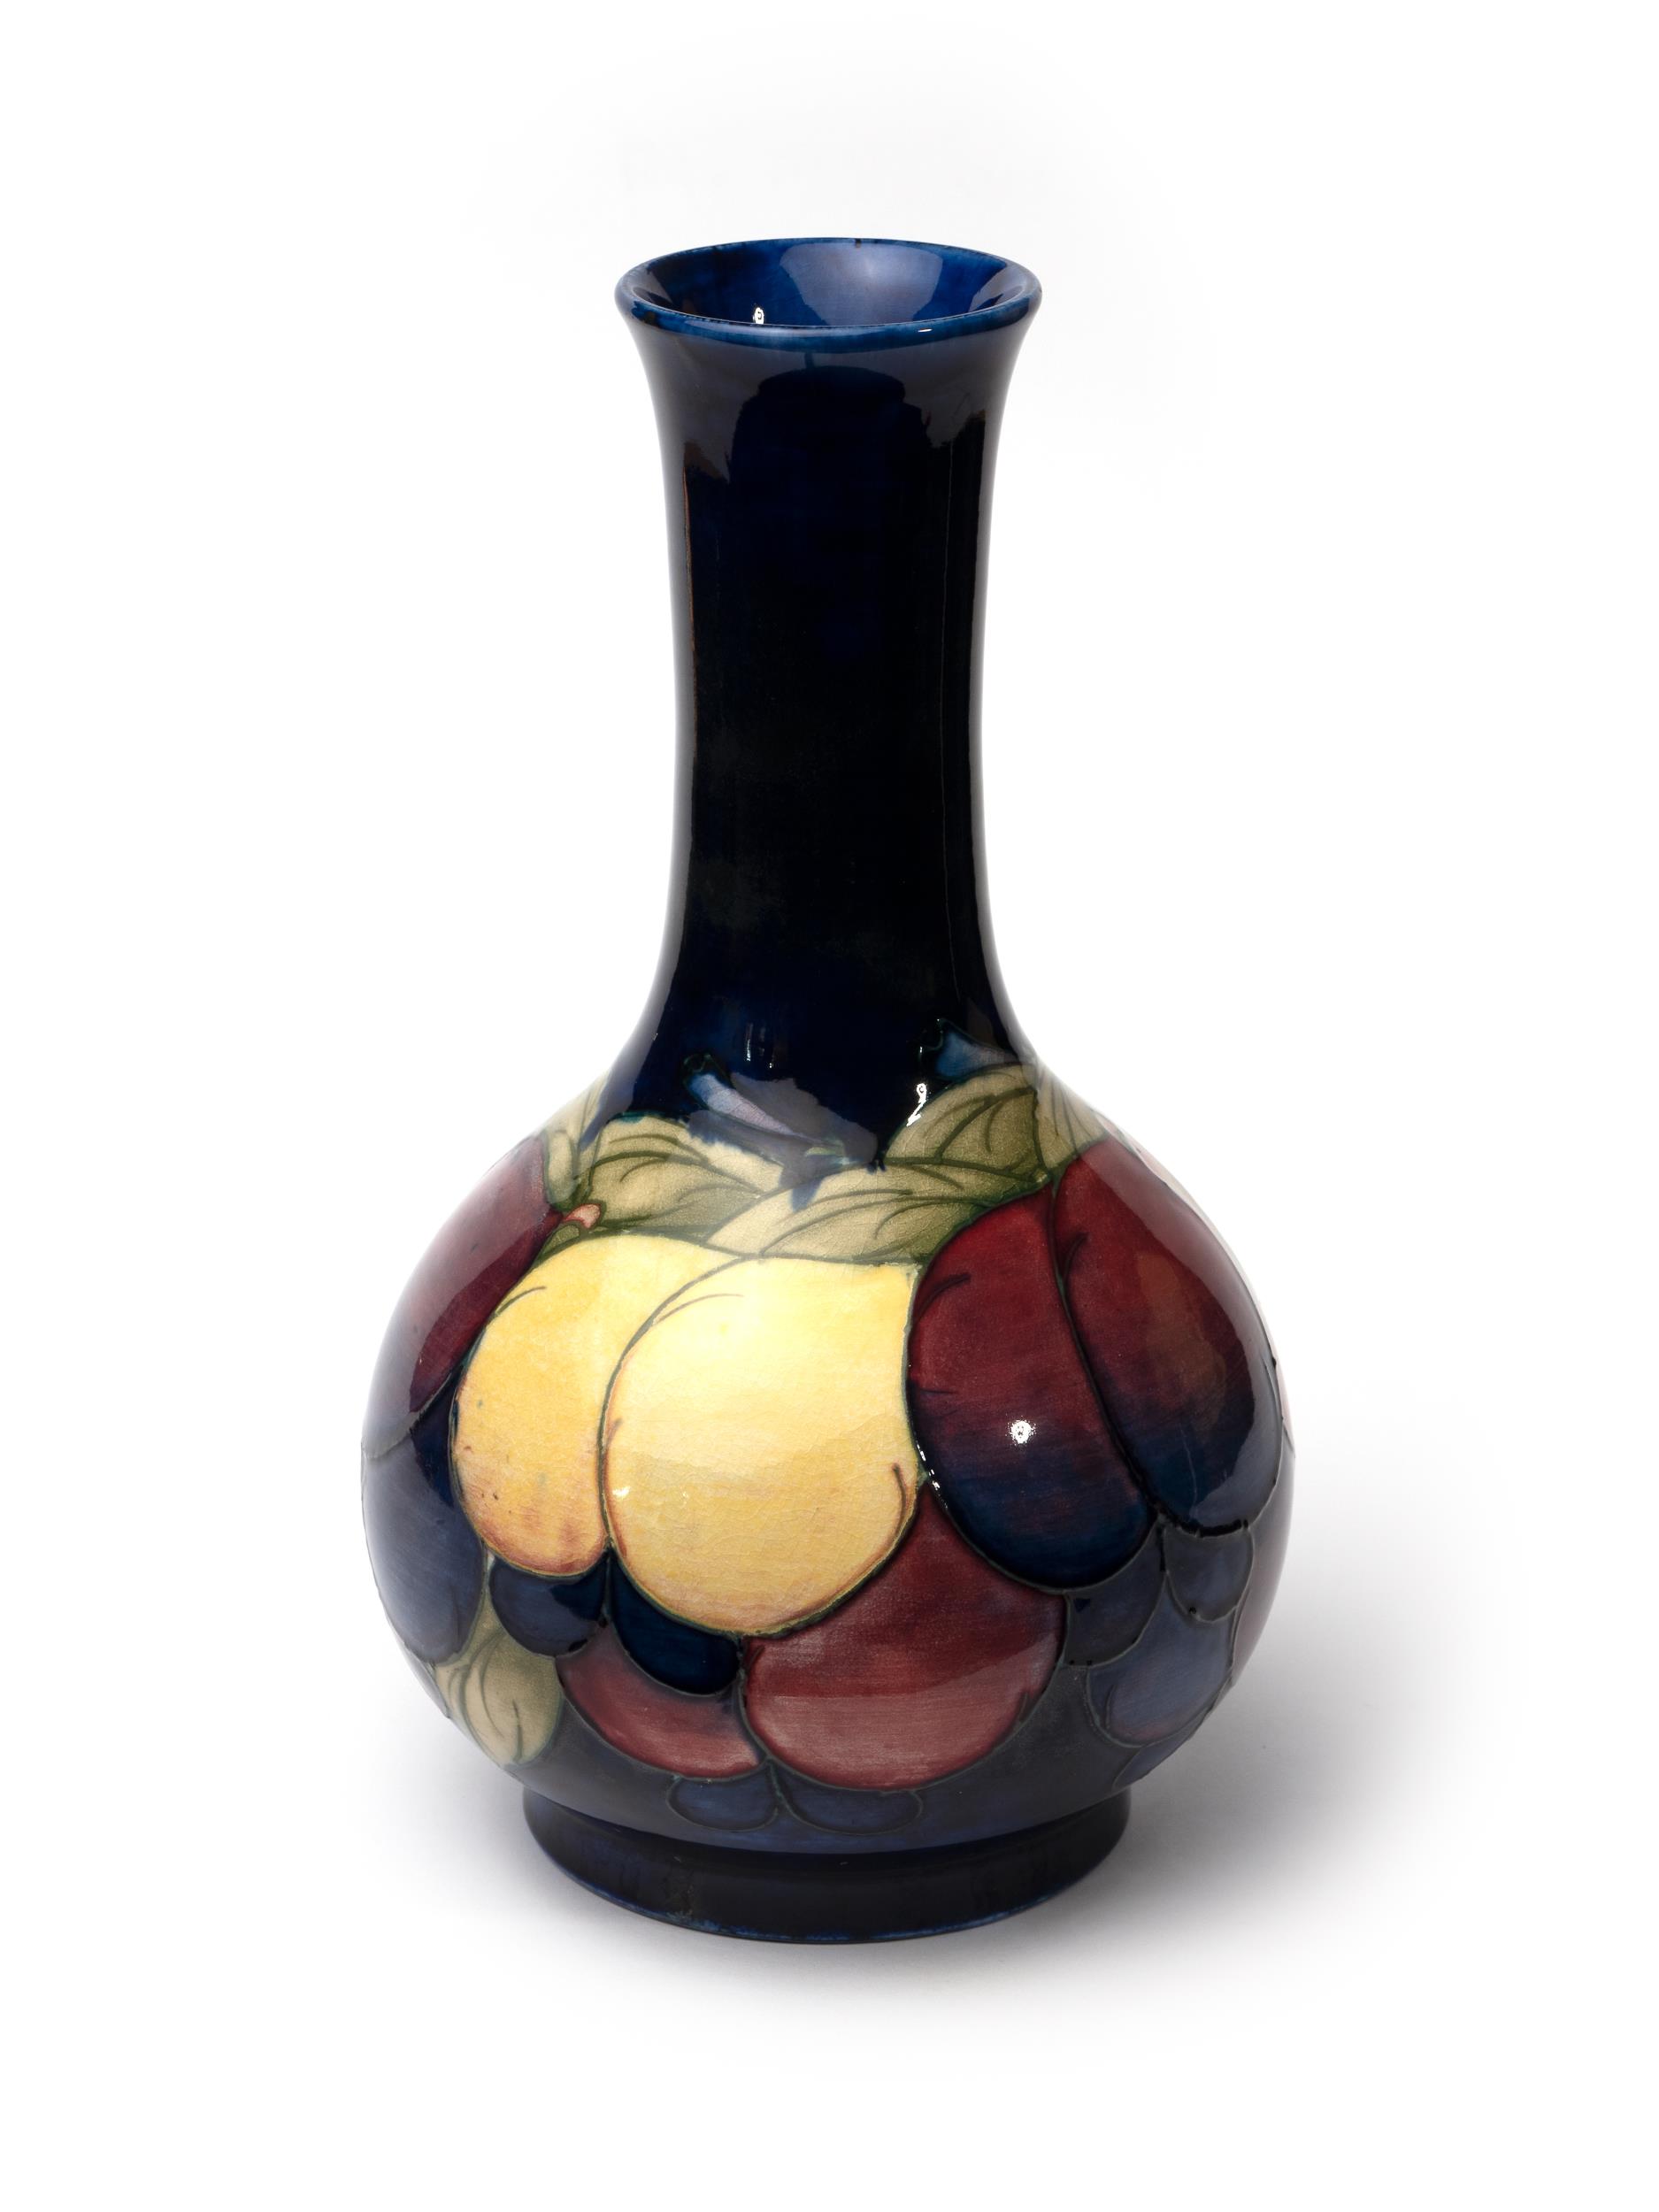 William Moorcroft wisteria design vase on blue ground, with blue William Moorcroft signature and